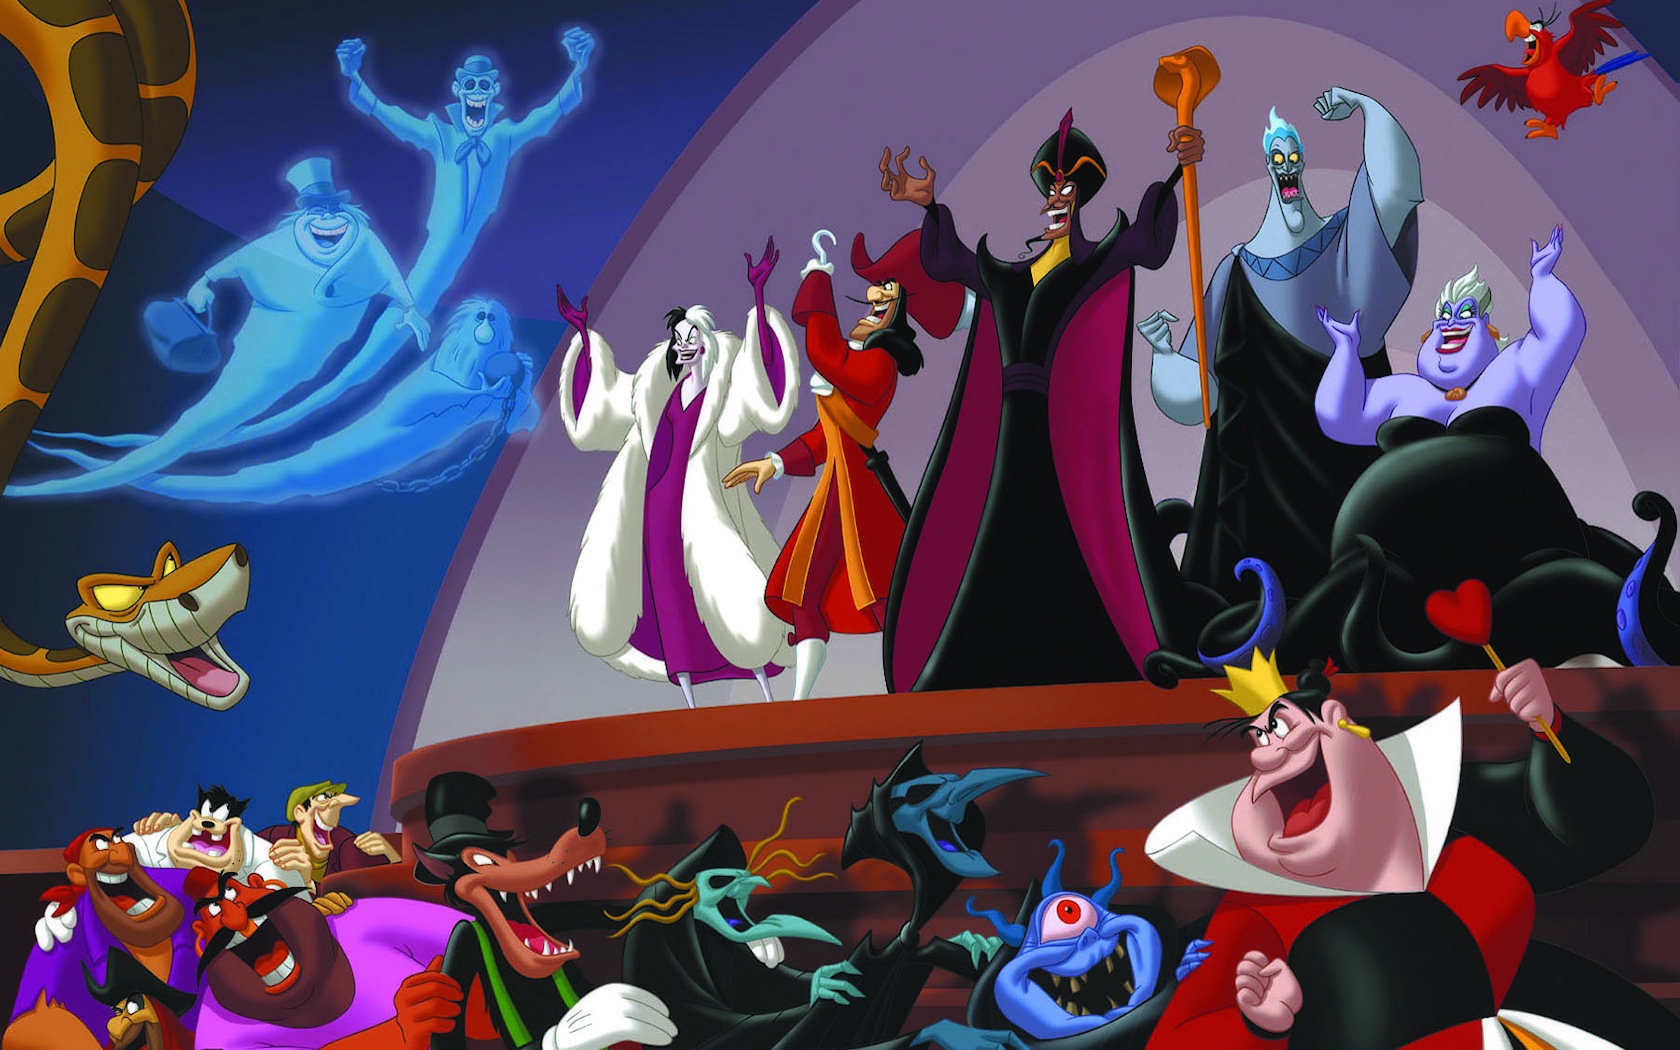 Disney villains collaged wallpaper with Jafar, Ursula, Captain Hook, ghost, Cruella De Vil, and Hades.